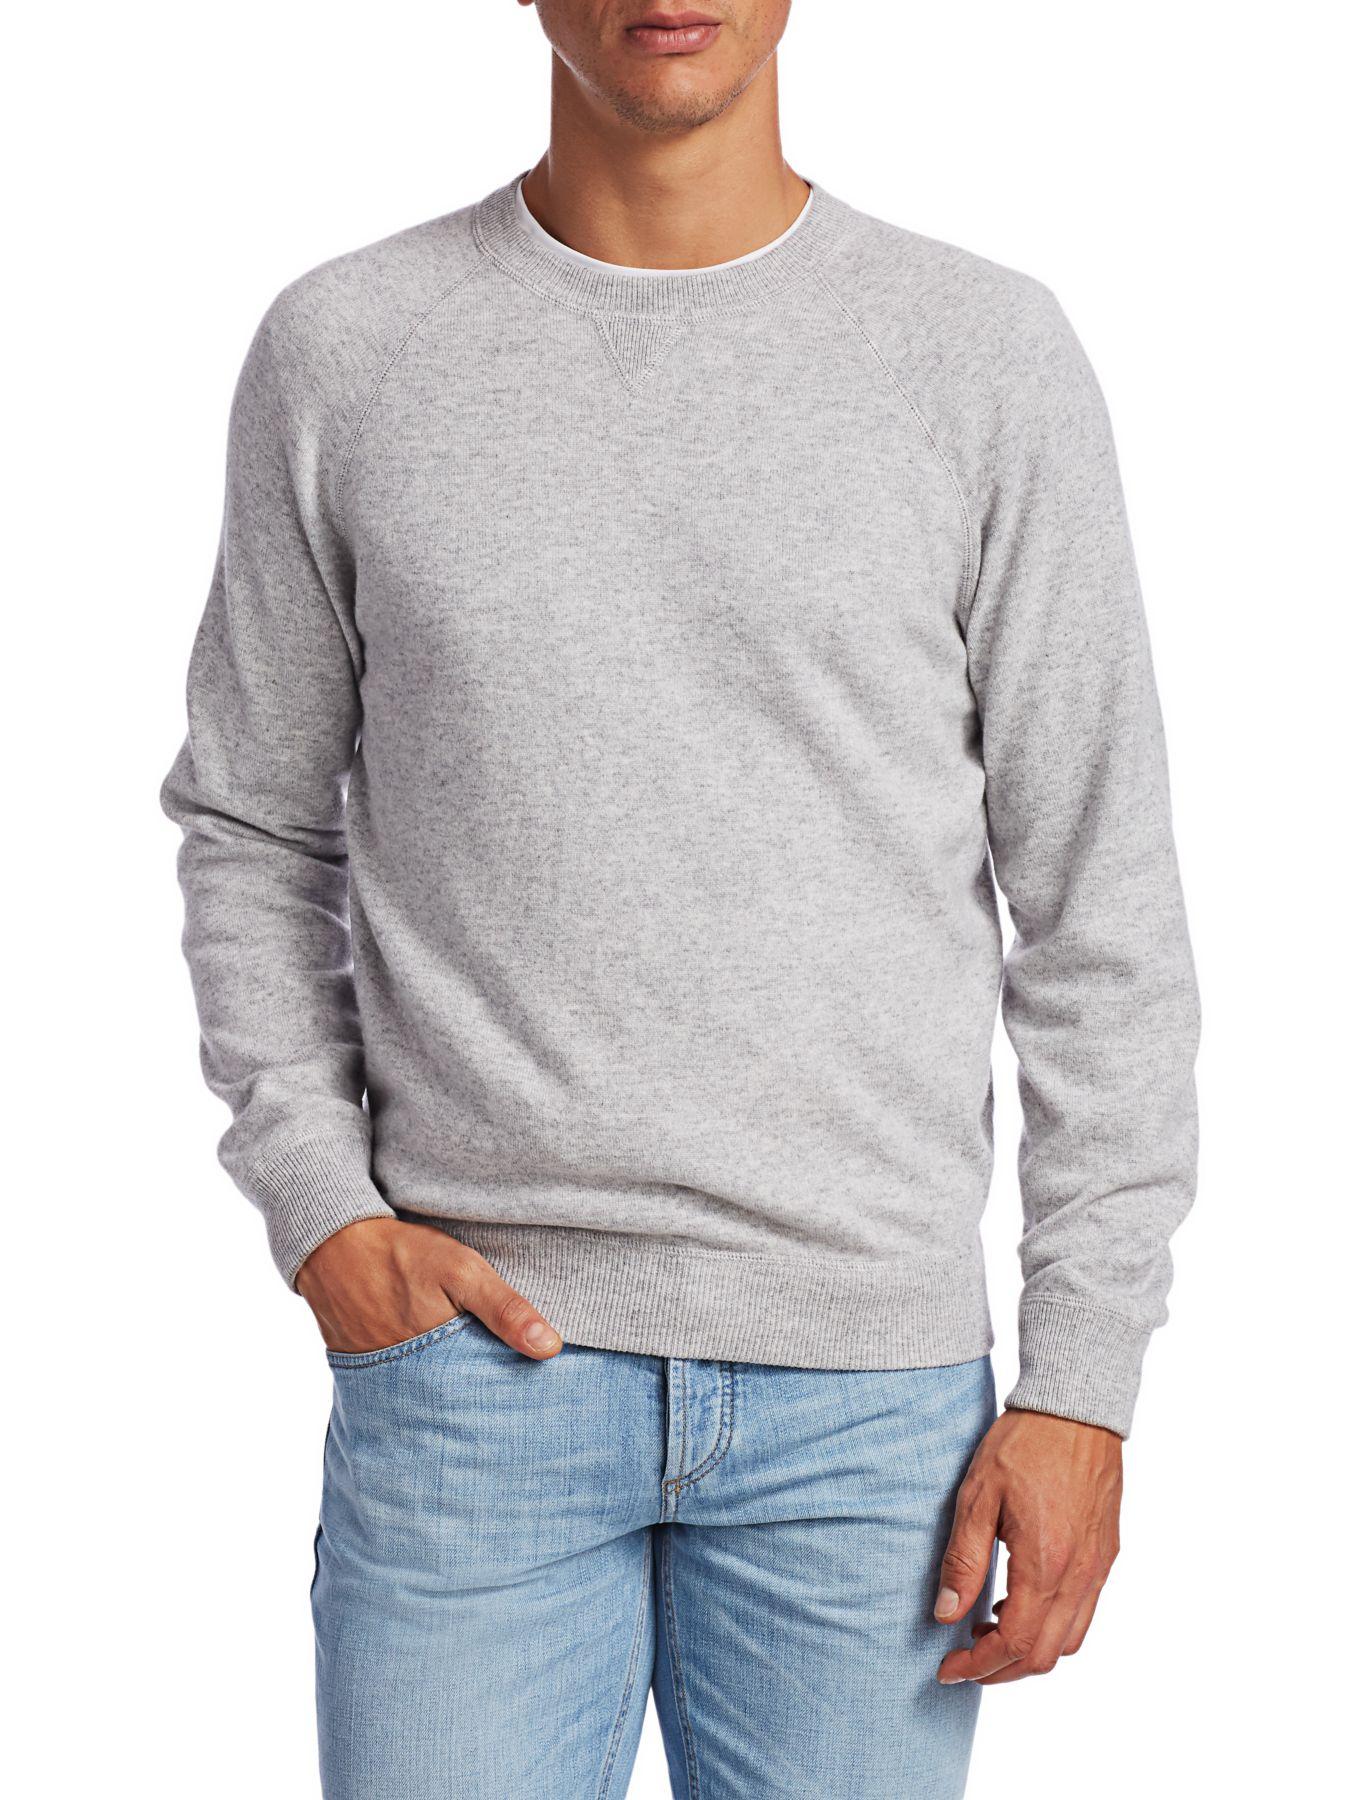 Brunello Cucinelli Classic Crewneck Sweater in Grey (Gray) for Men - Lyst